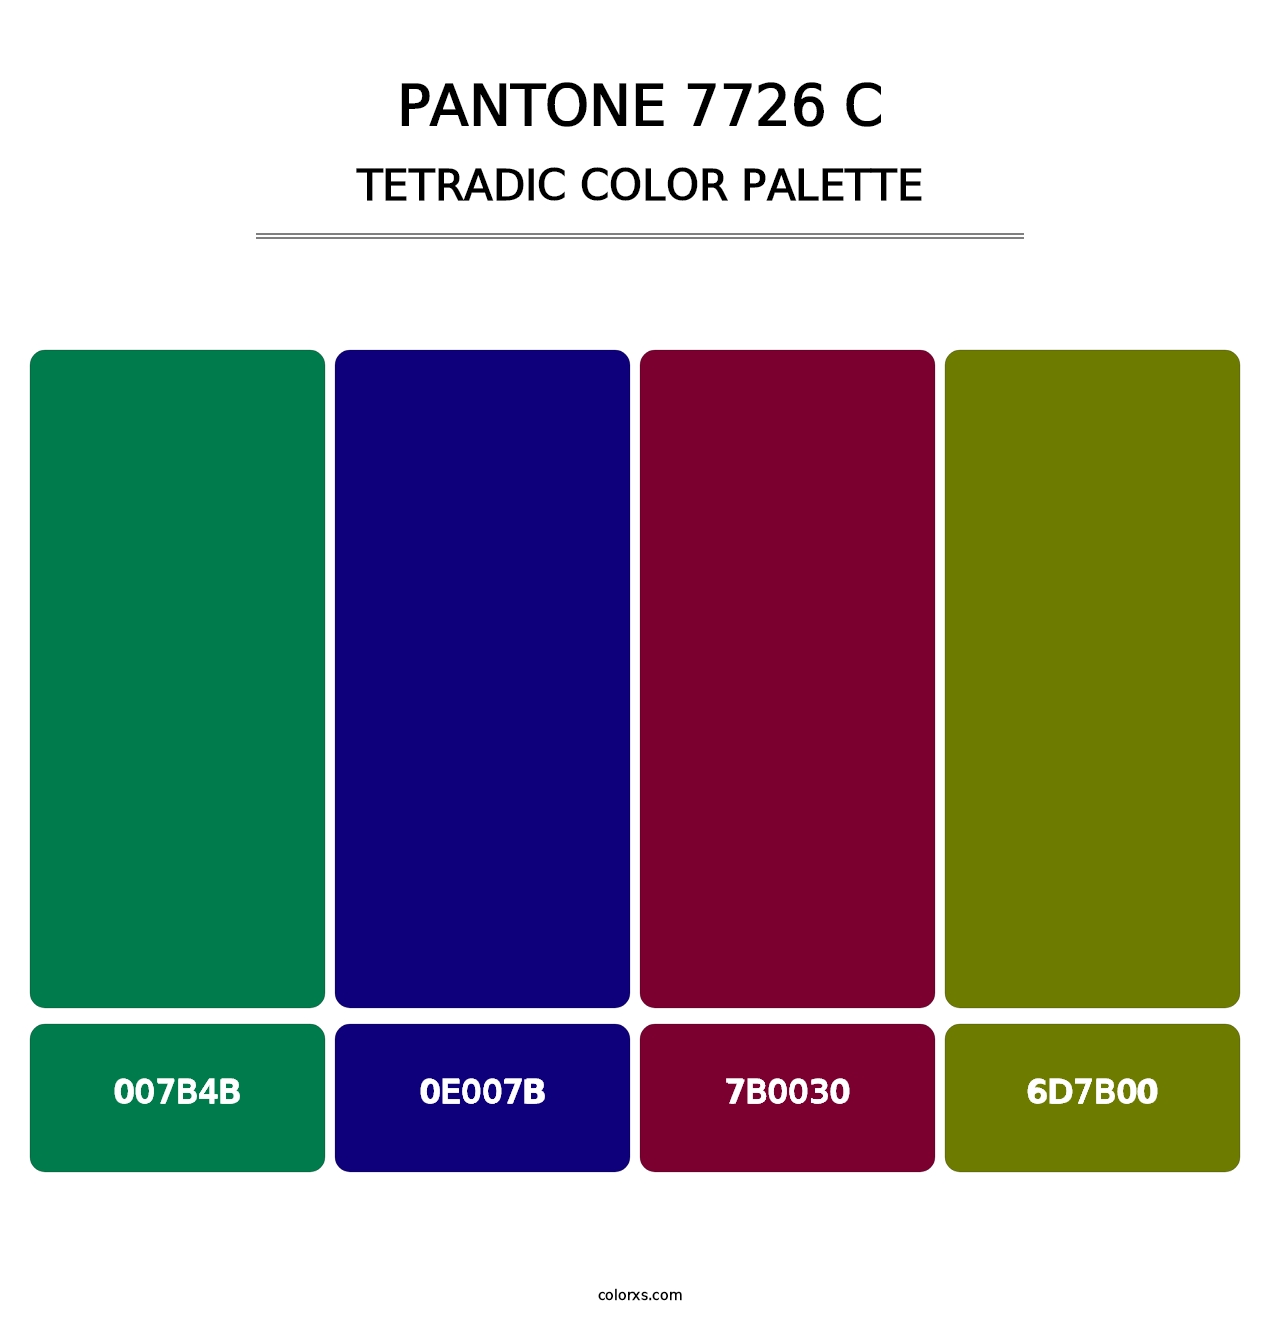 PANTONE 7726 C - Tetradic Color Palette